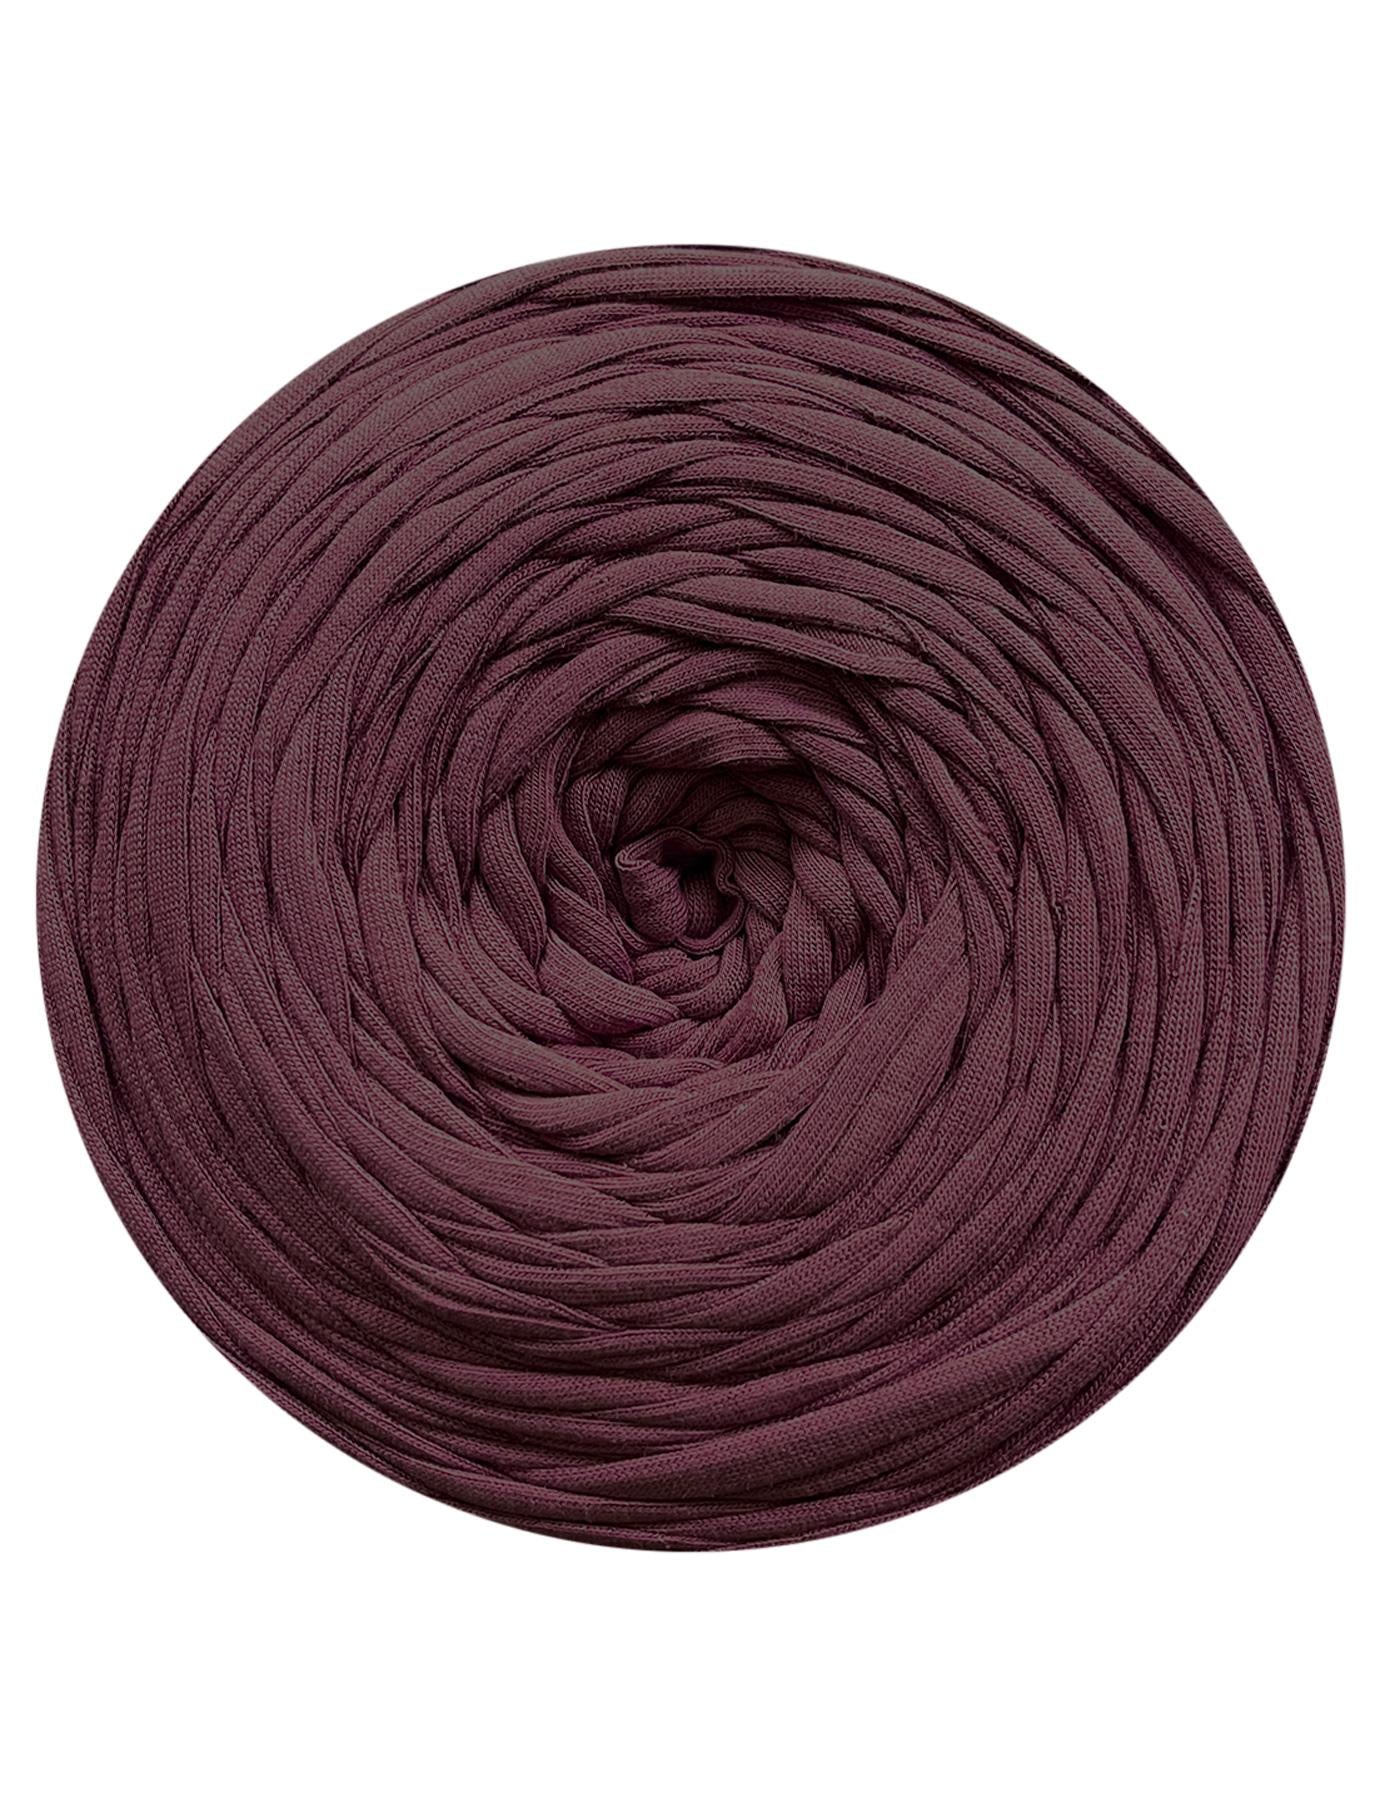 Dark plum t-shirt yarn (100-120m)